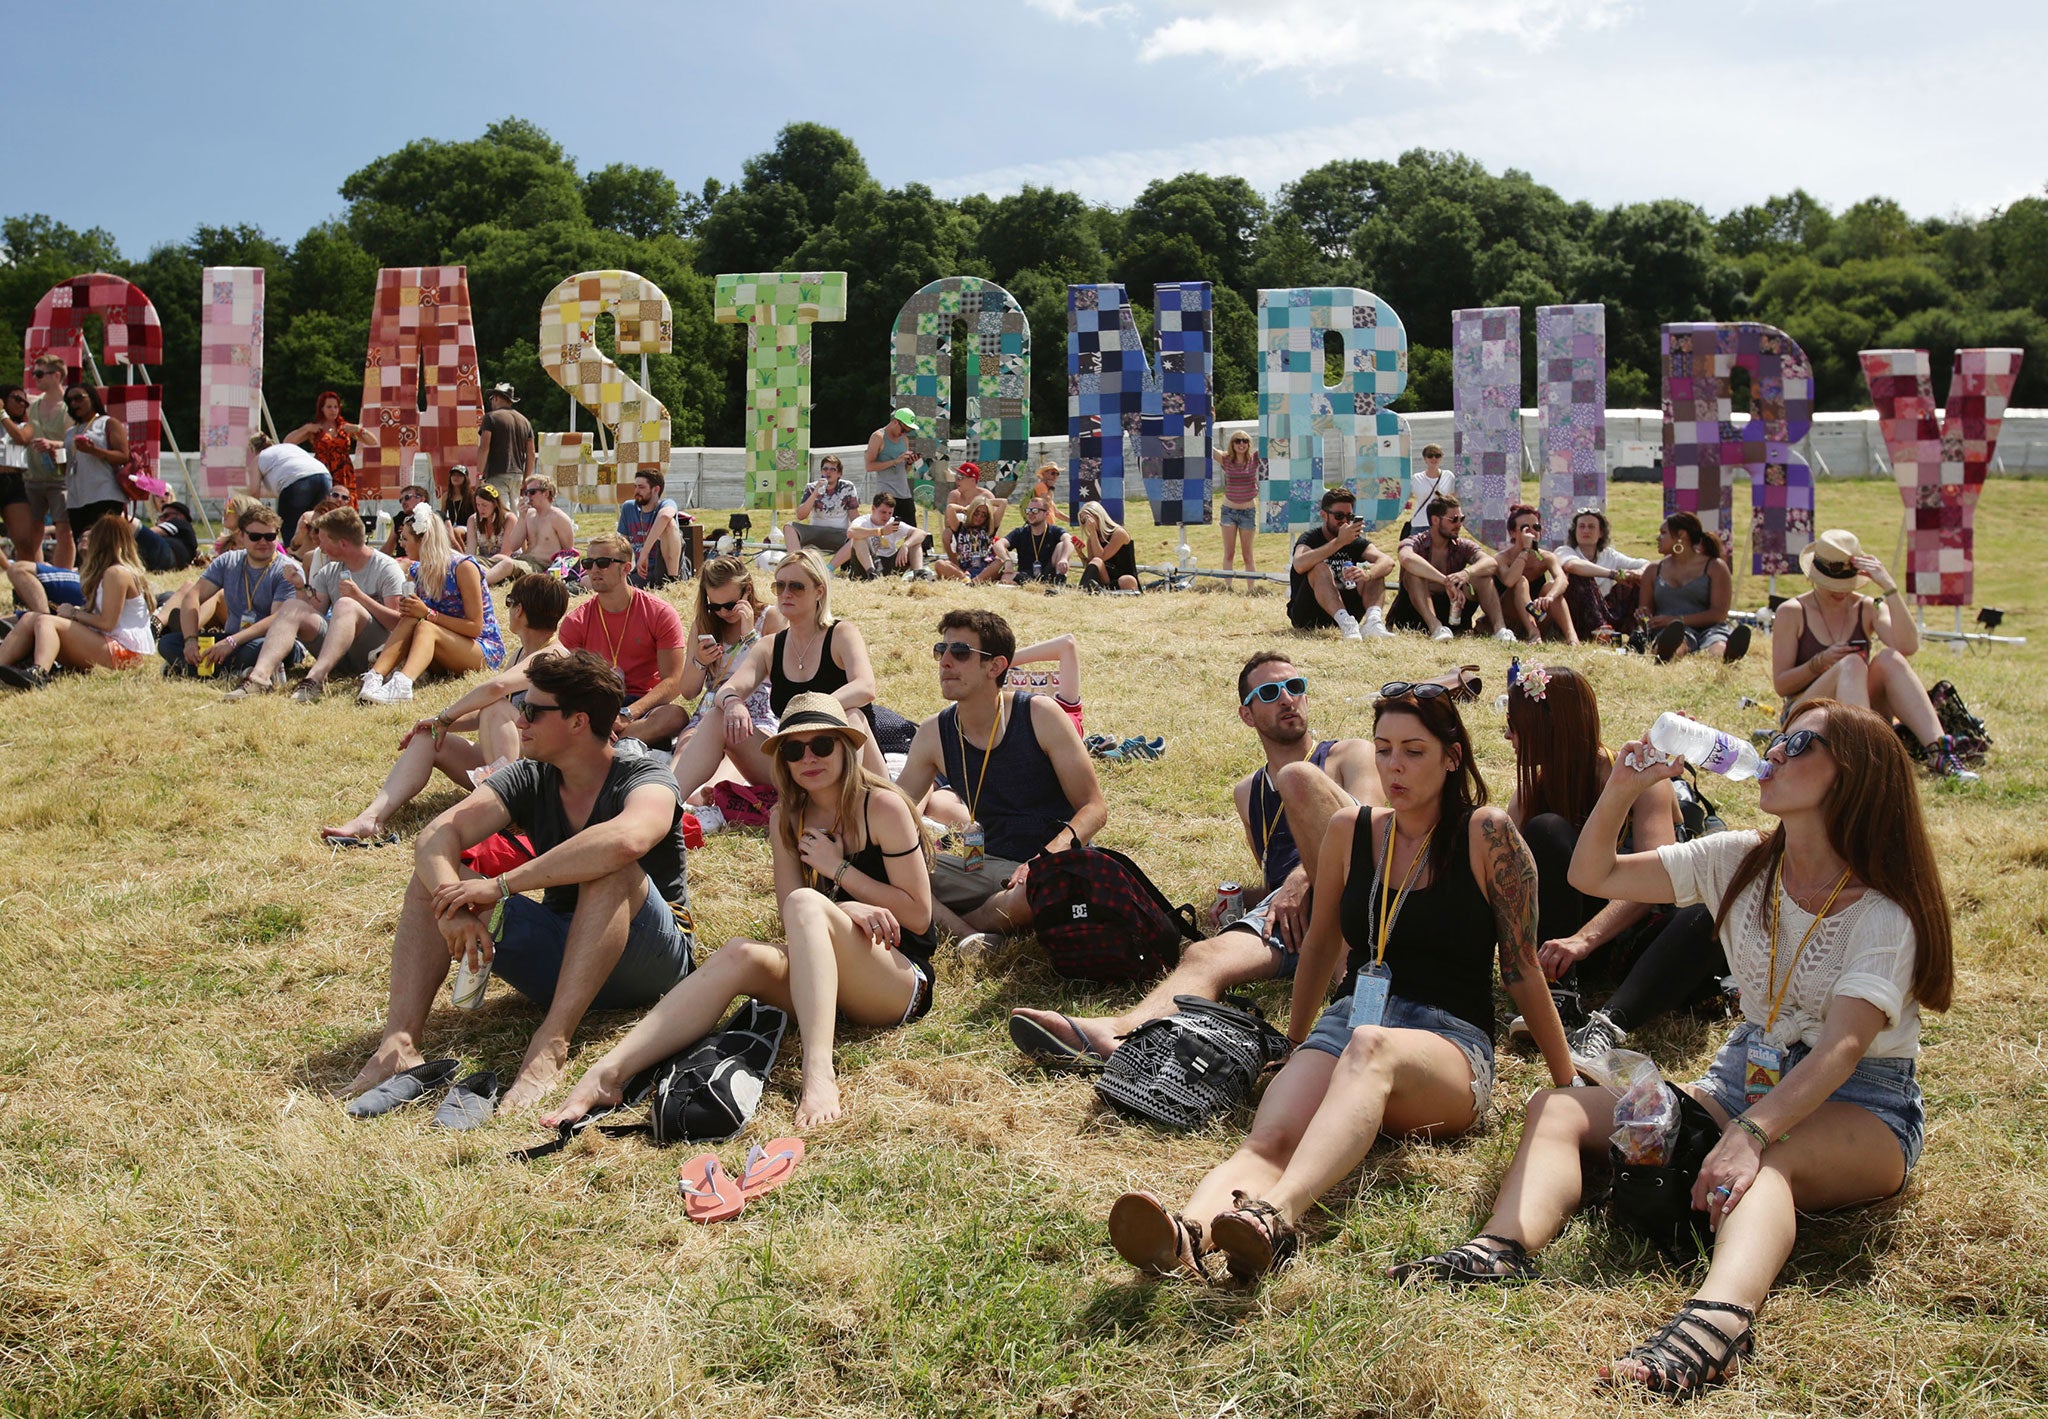 People enjoythe hot weather at Glastonbury Festival